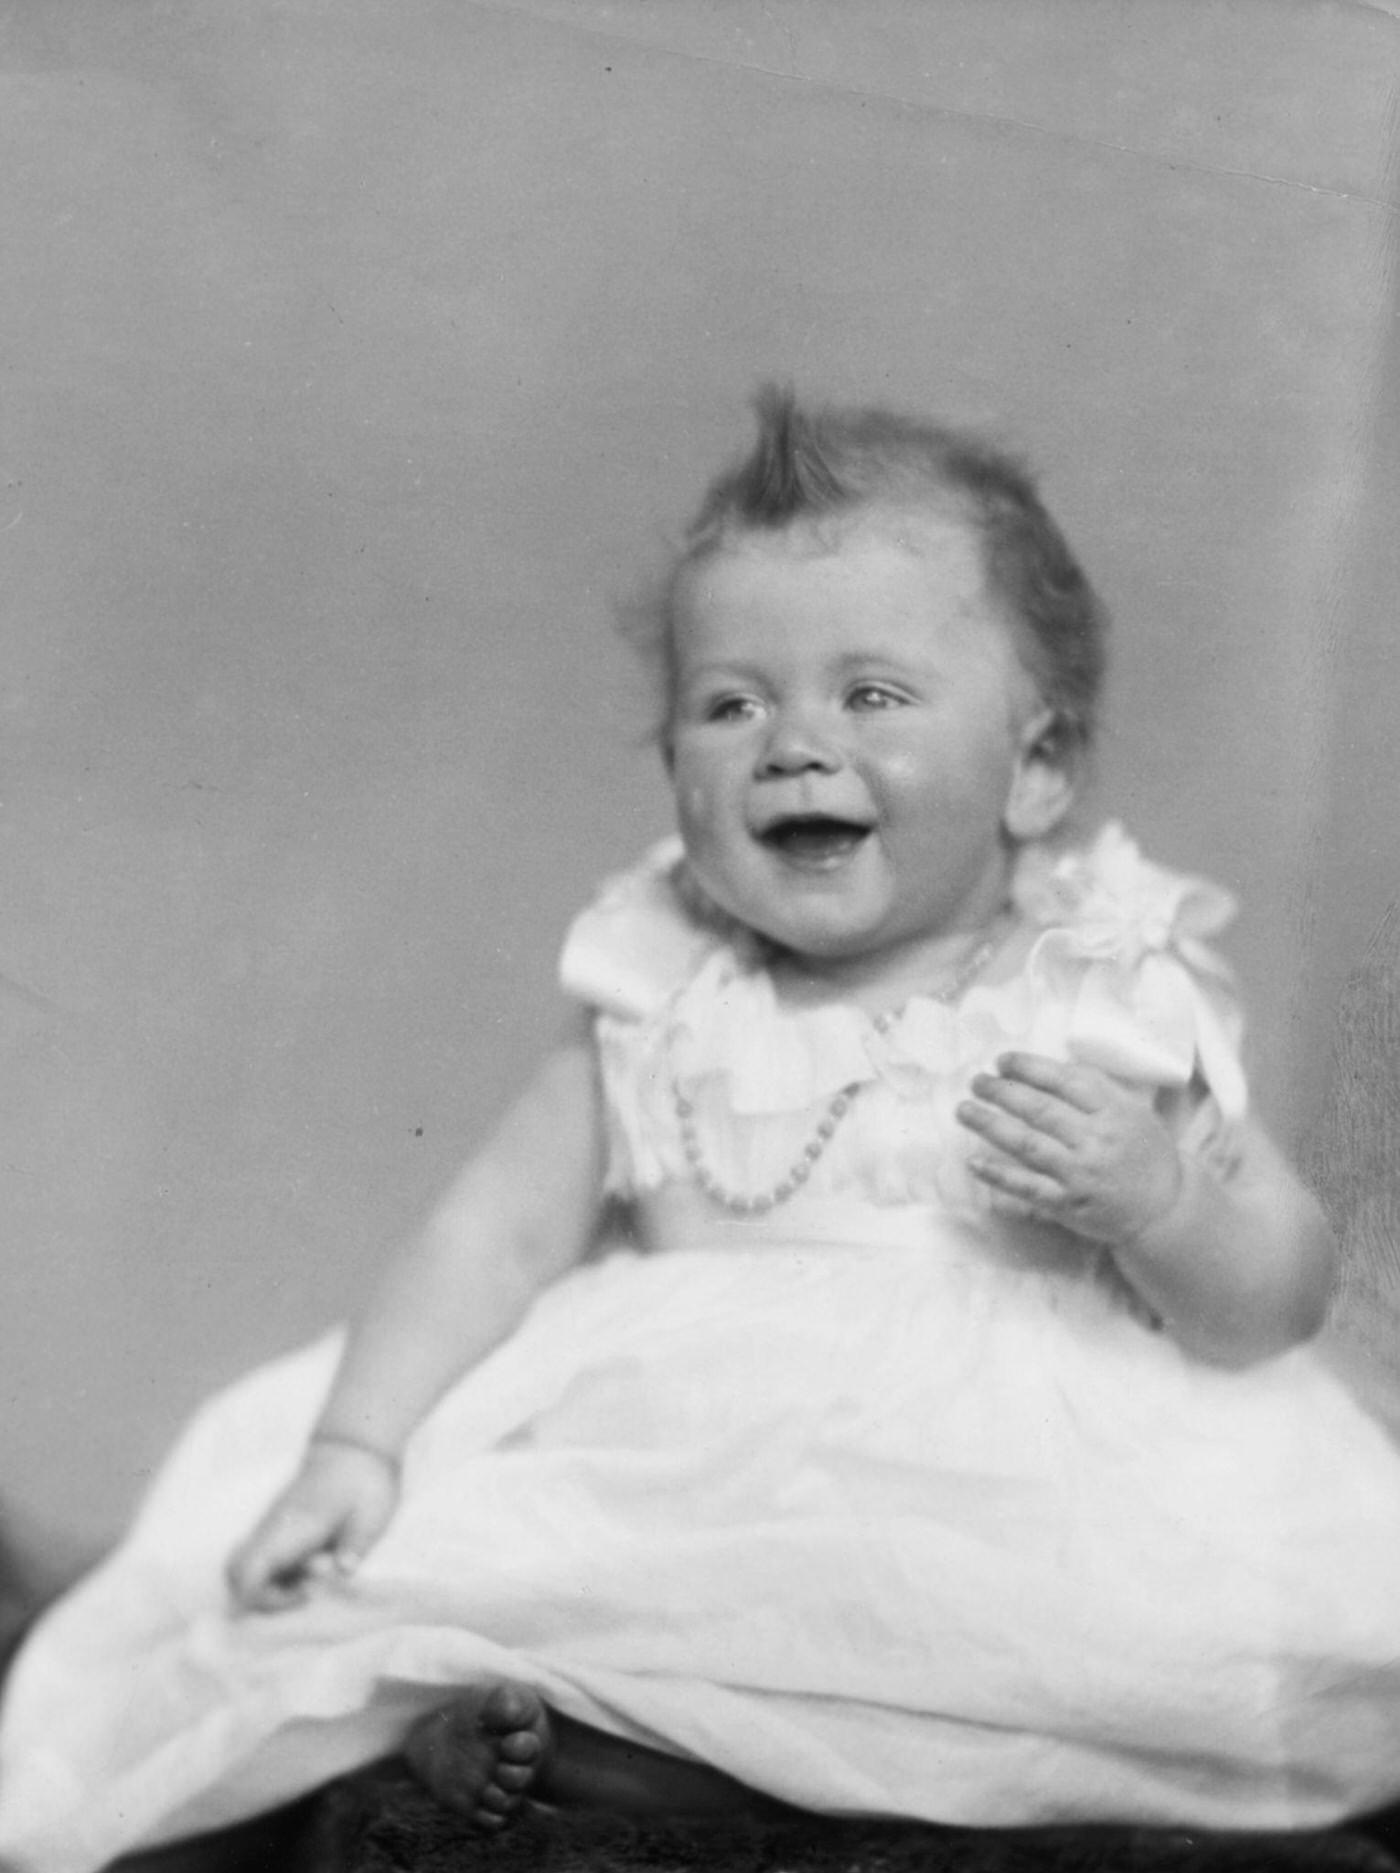 Childhood portrait of Queen Elizabeth II as a baby in December 1926.